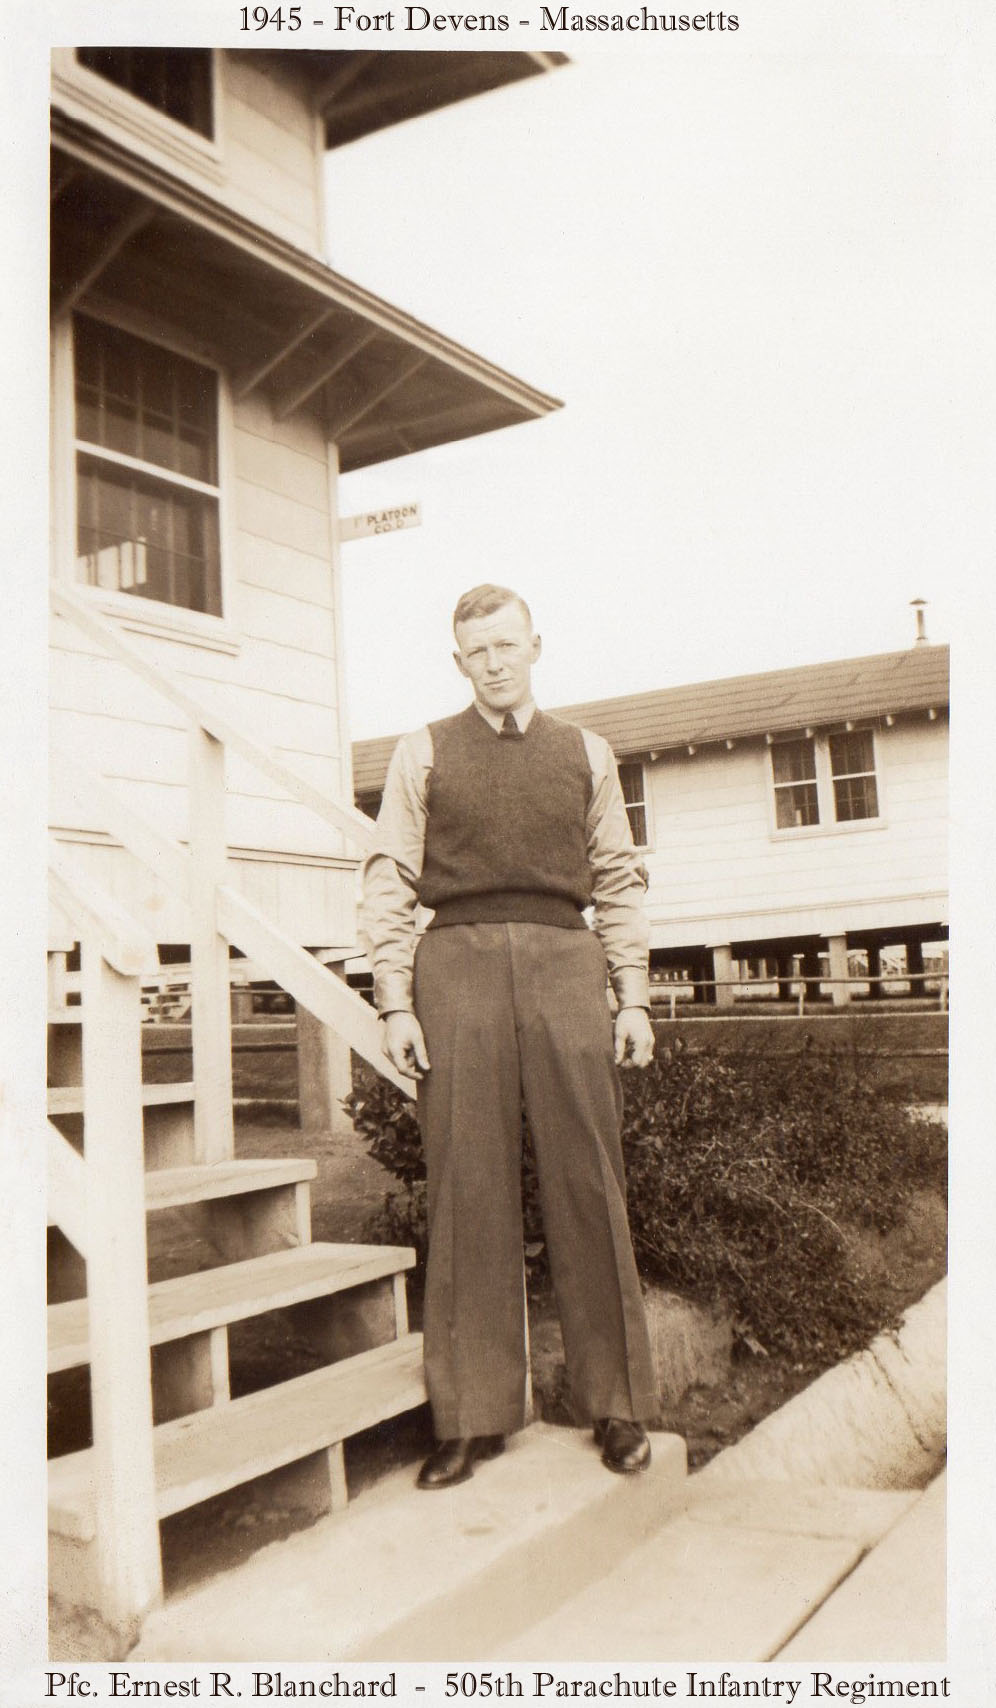 Pfc. Ernest R Blanchard before discharge at Fort Devens, Massachusetts 1945